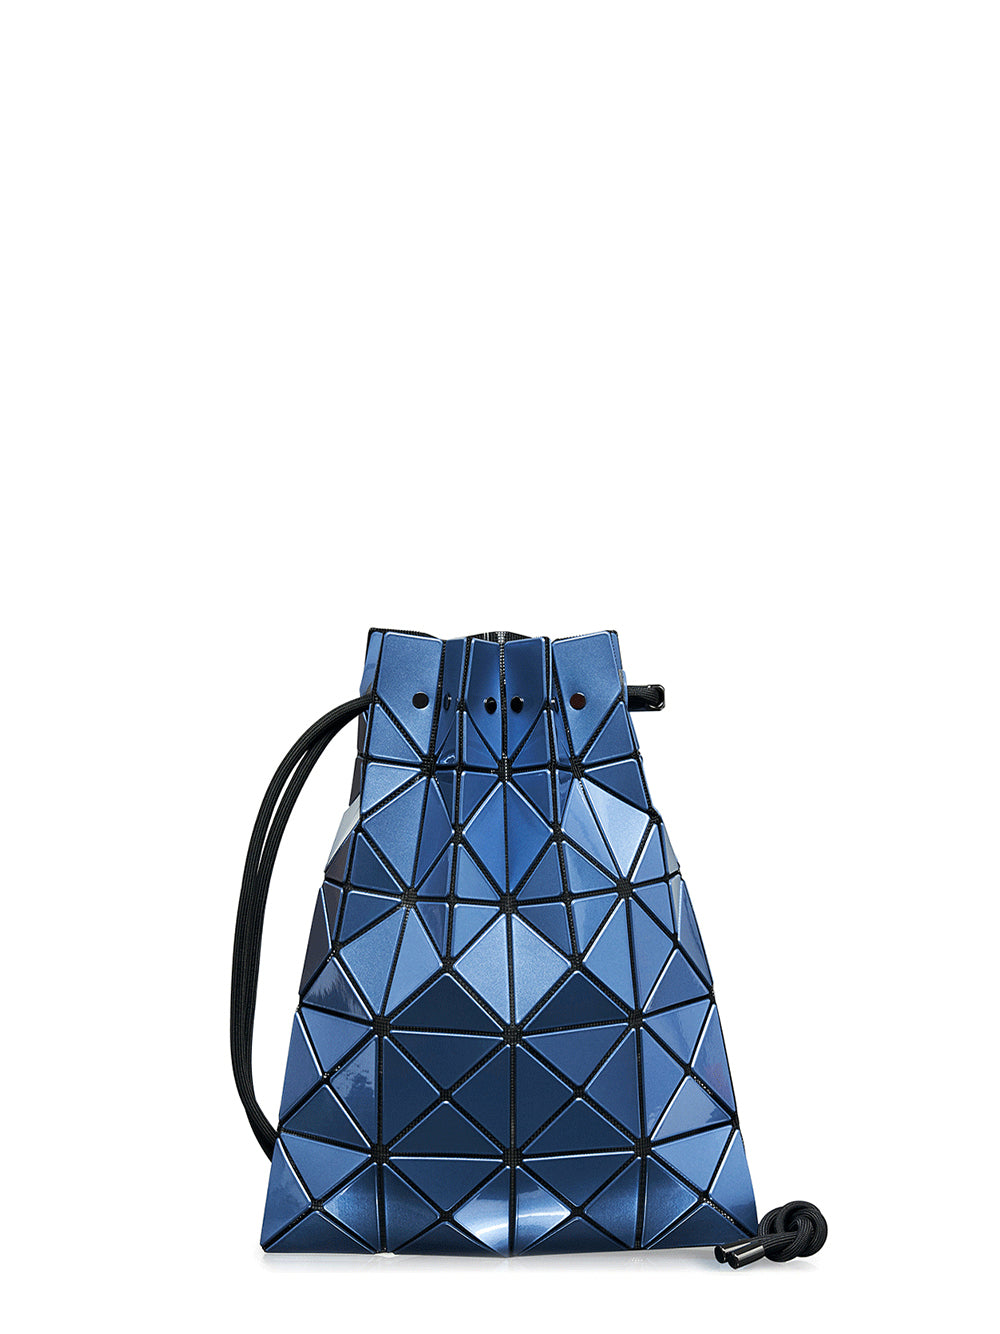 LUCENT METALLIC Mini Handbag (Blue)